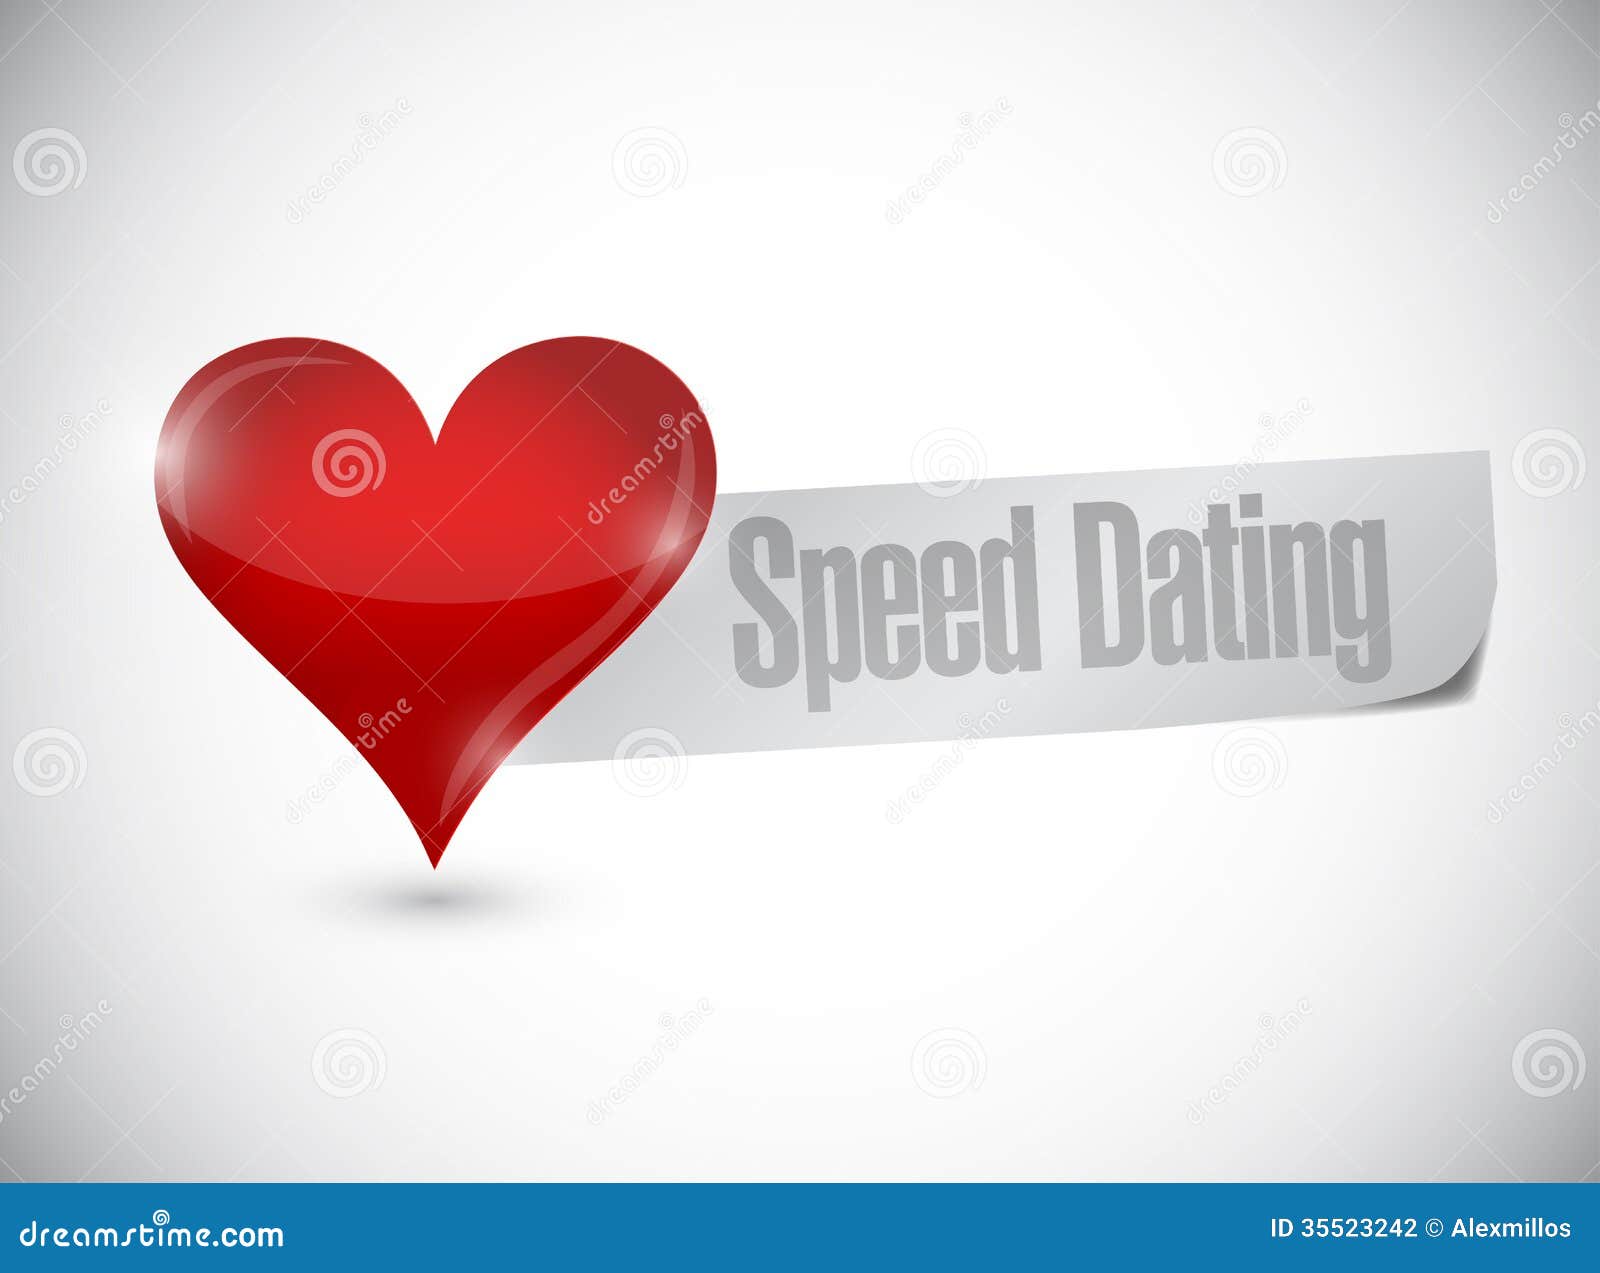 Speed dating la Palma exclusive réciproque